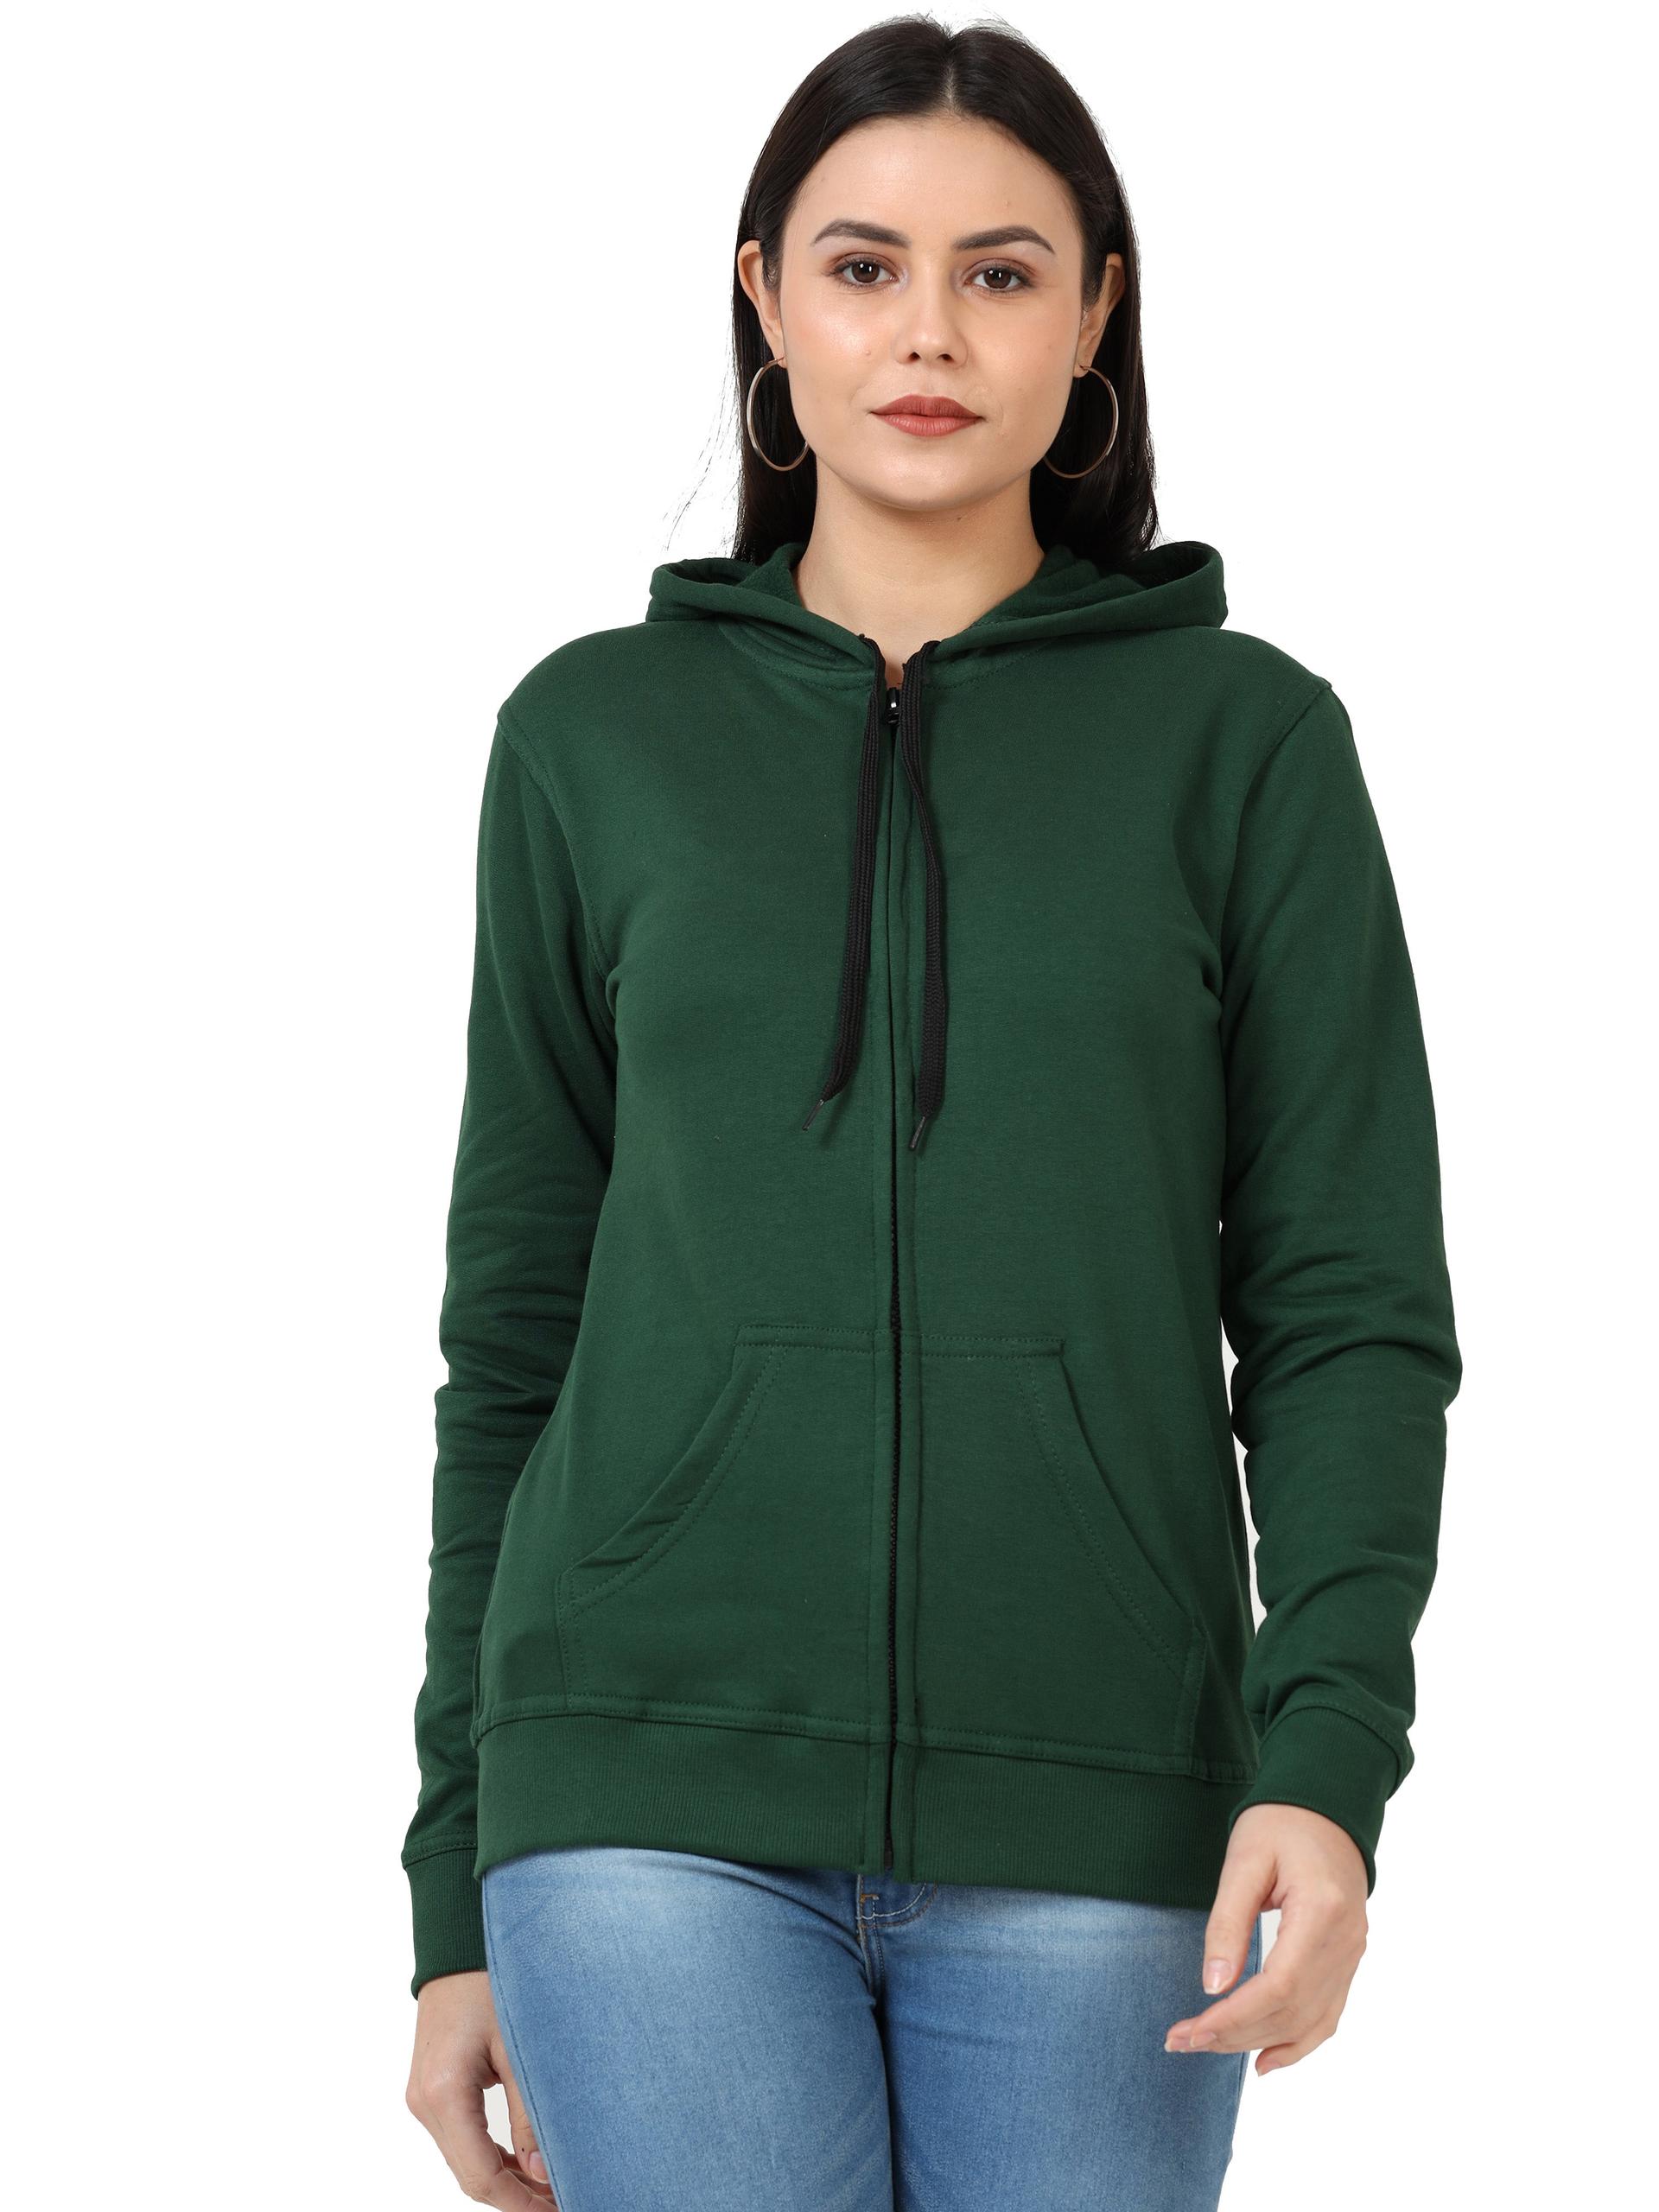 Women's Cotton Plain Full Sleeve Olive Green Color Hoodies/Sweatshirt